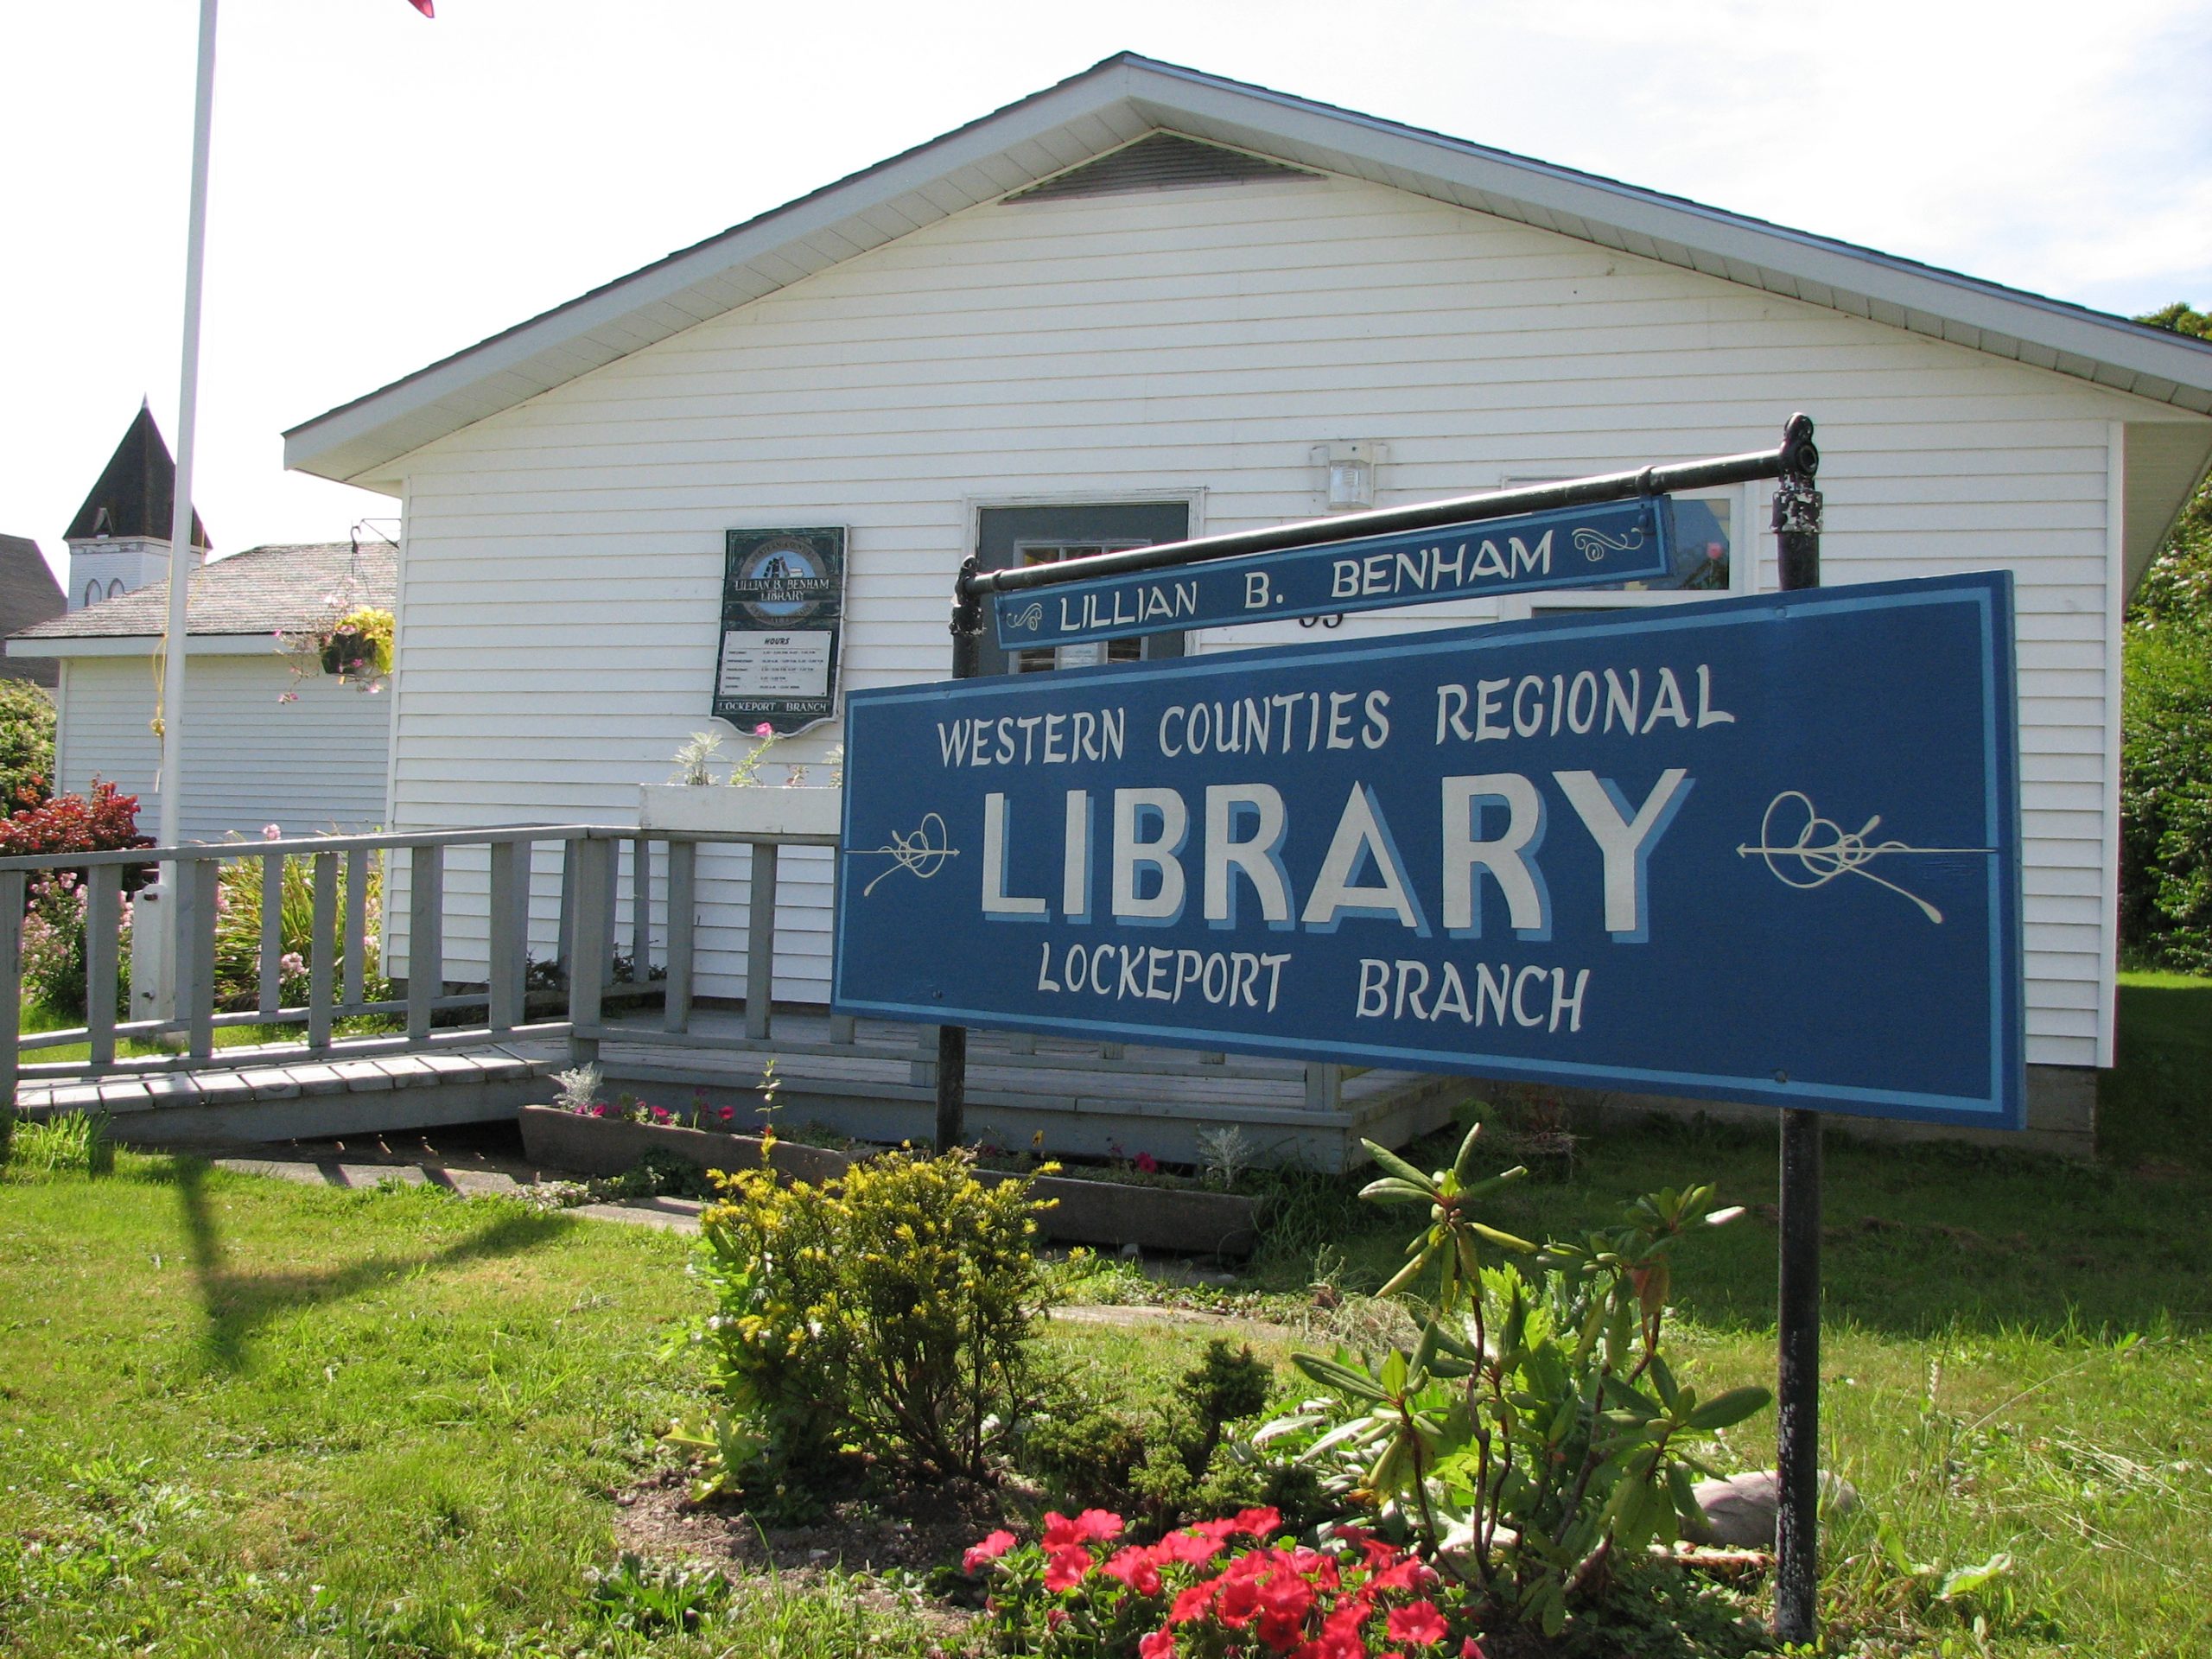 Image of Lillian B. Benham library